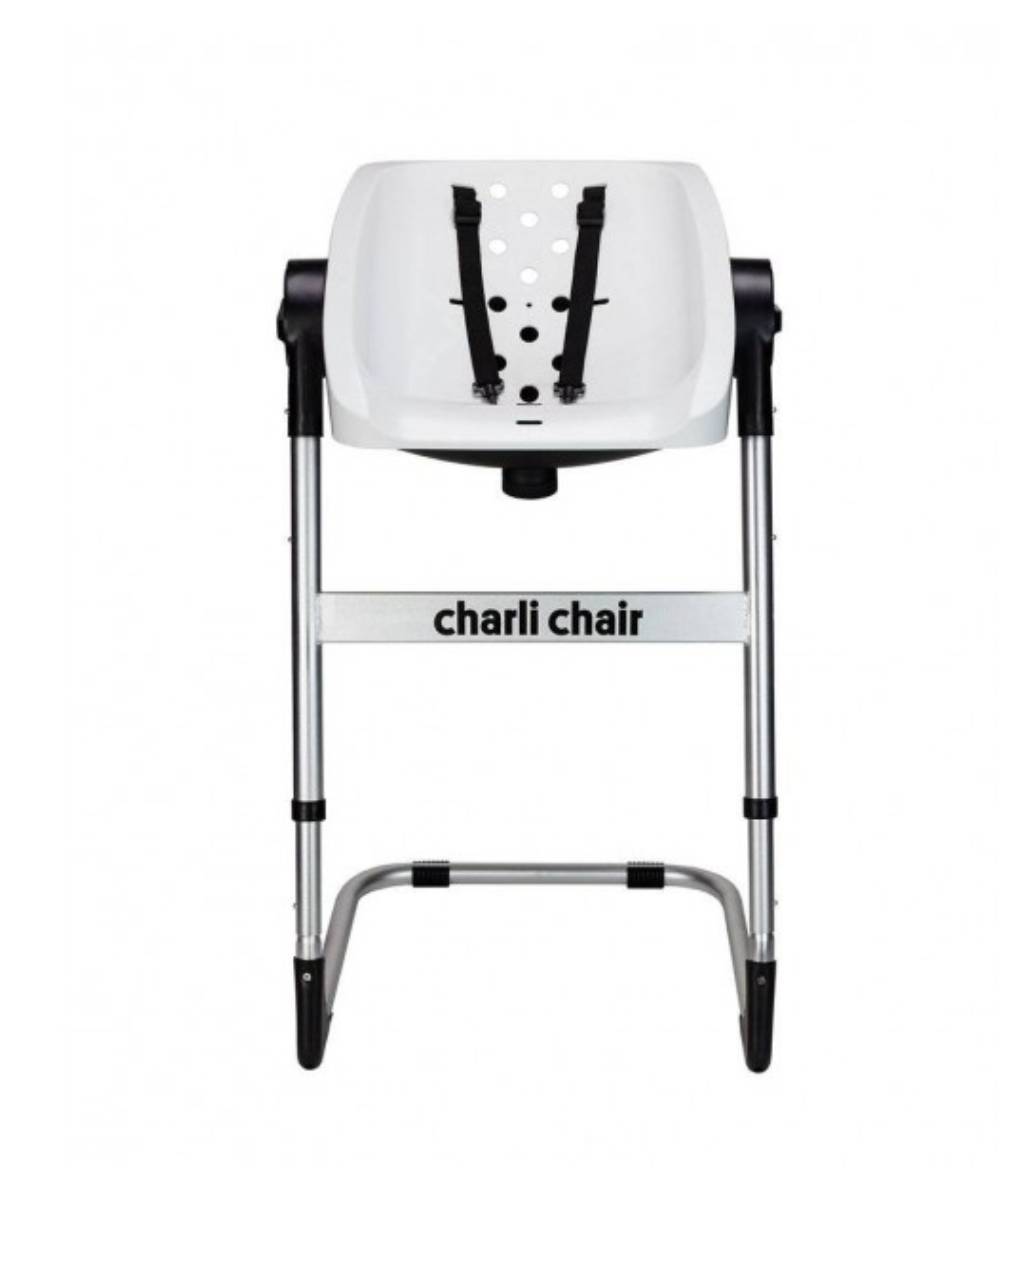 Charli chair καρέκλα ντουζιέρας - μπανάκι